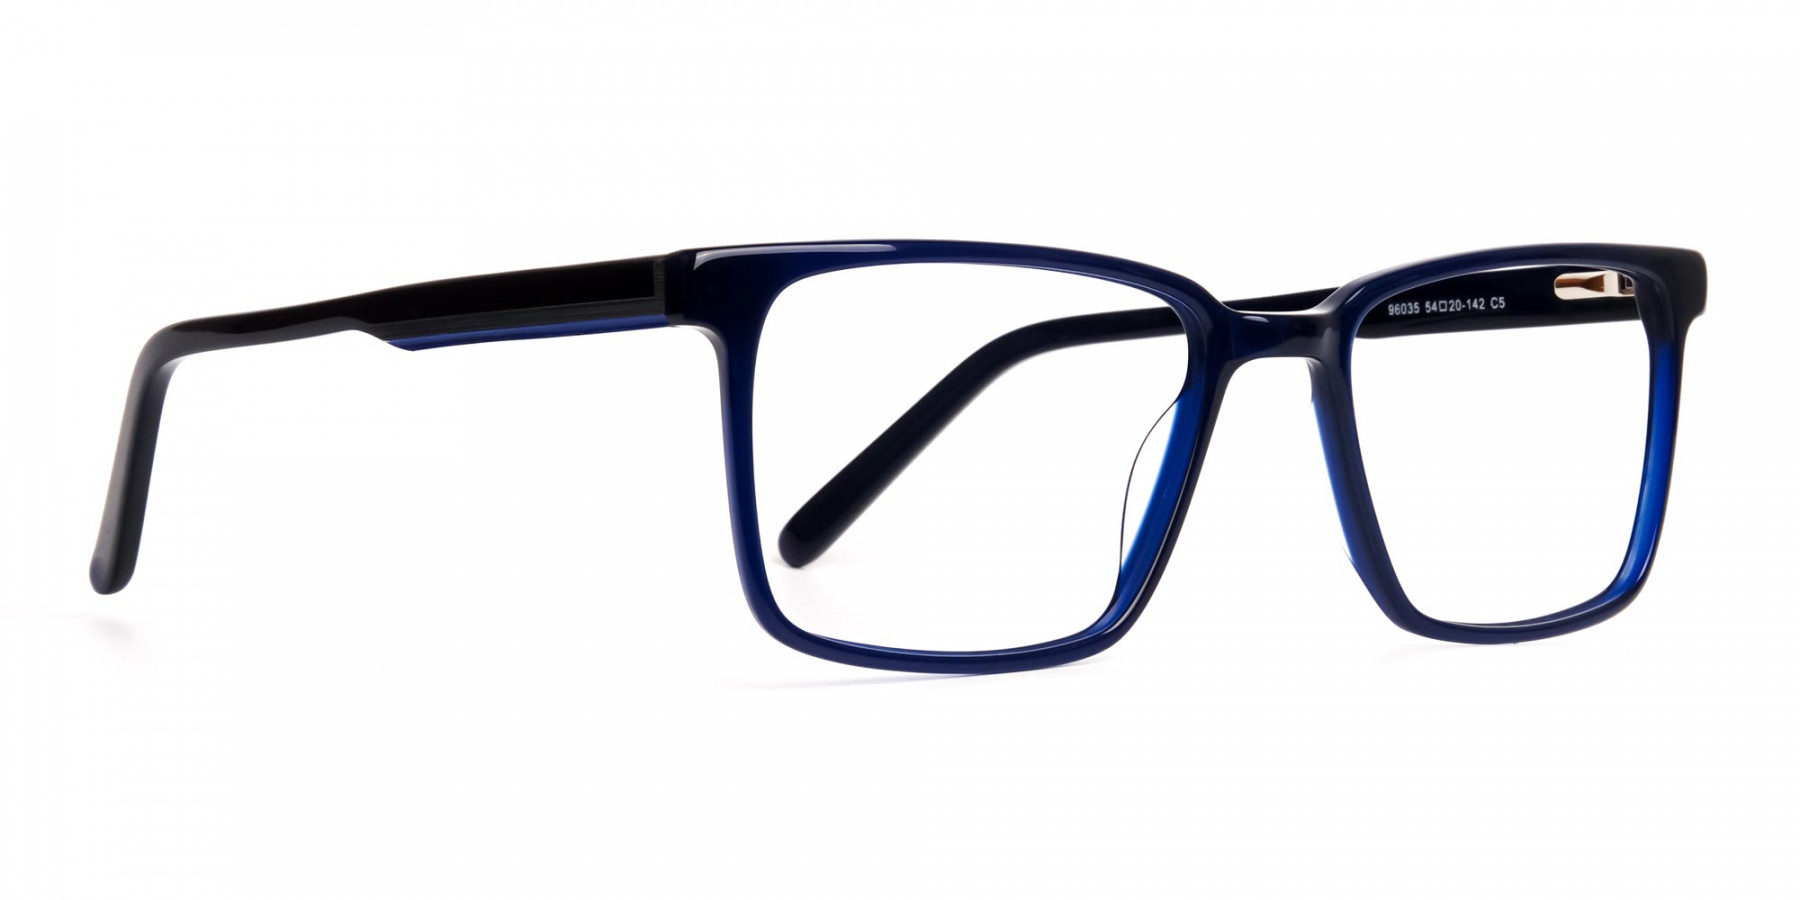 Black-and-Indigo-Blue-Rectangular-Glasses-frames-1